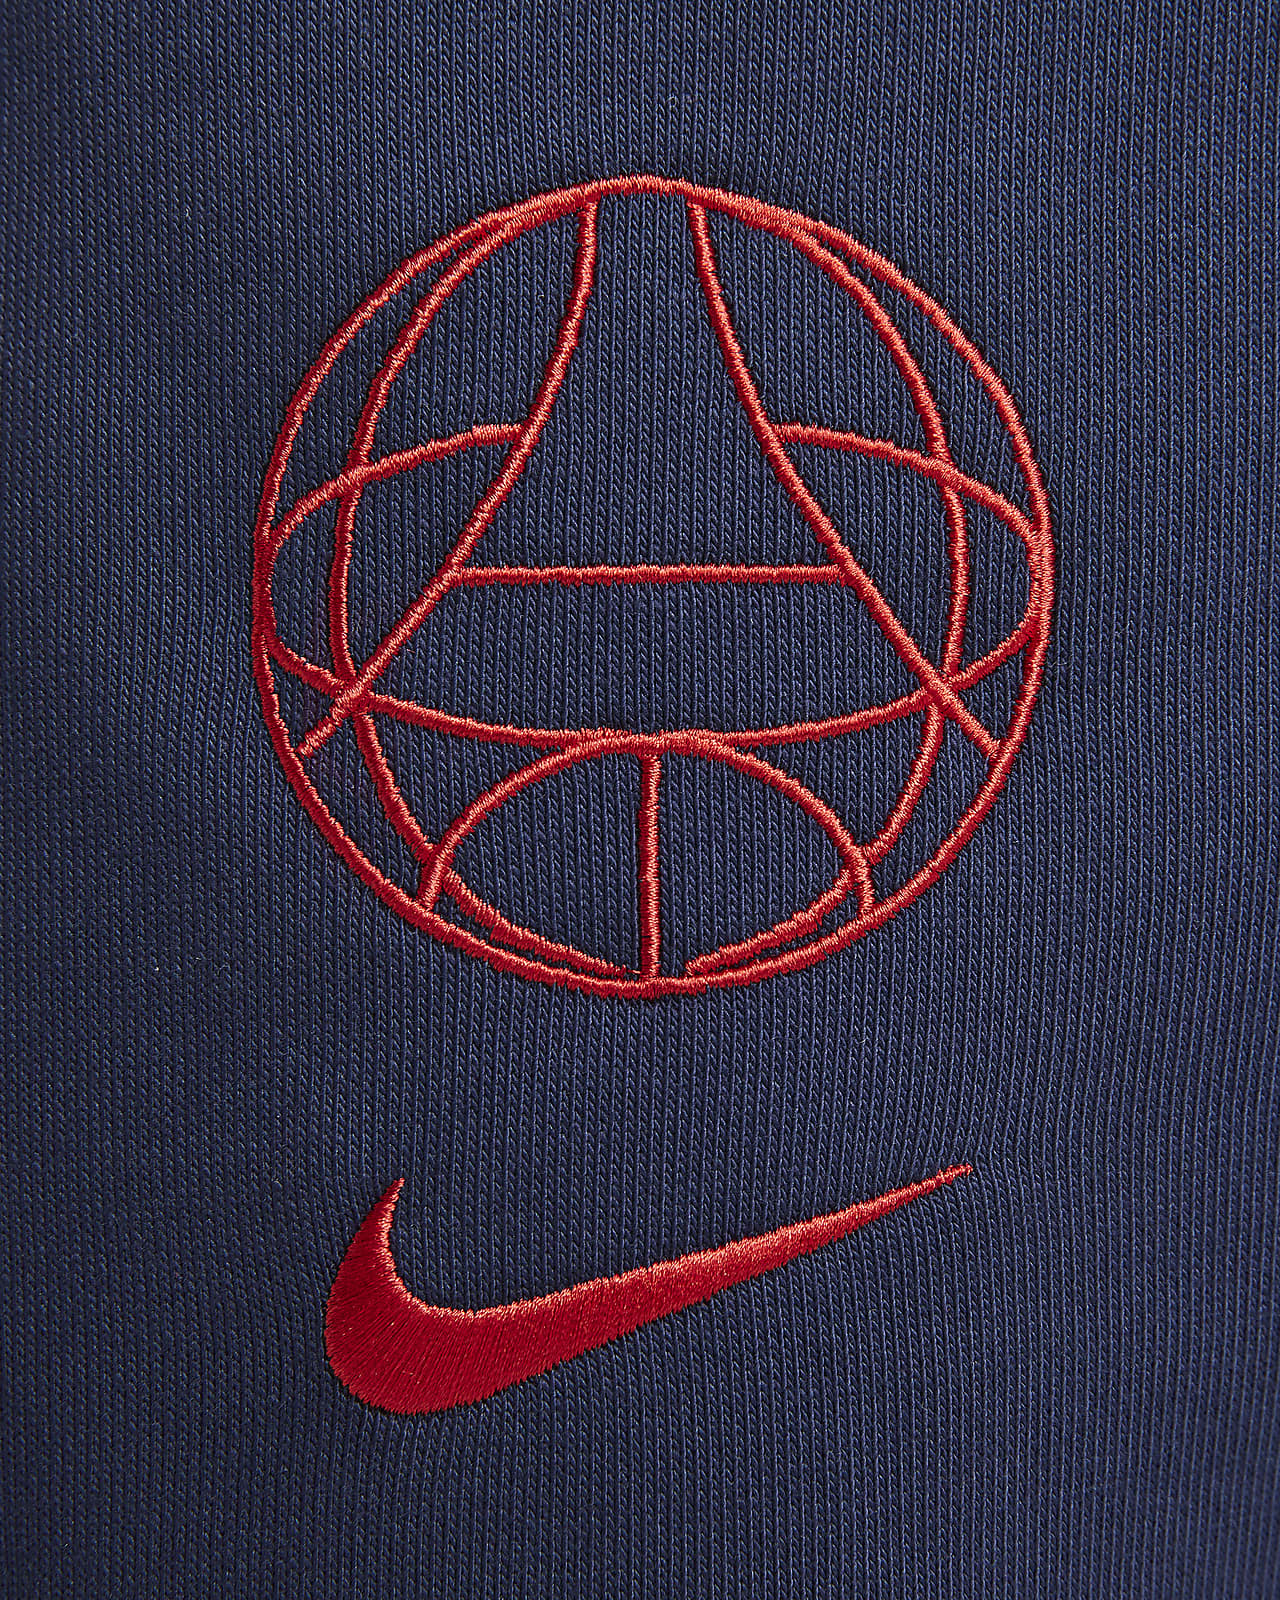 Paris Saint-Germain Standard Issue Men's Nike Soccer Pants